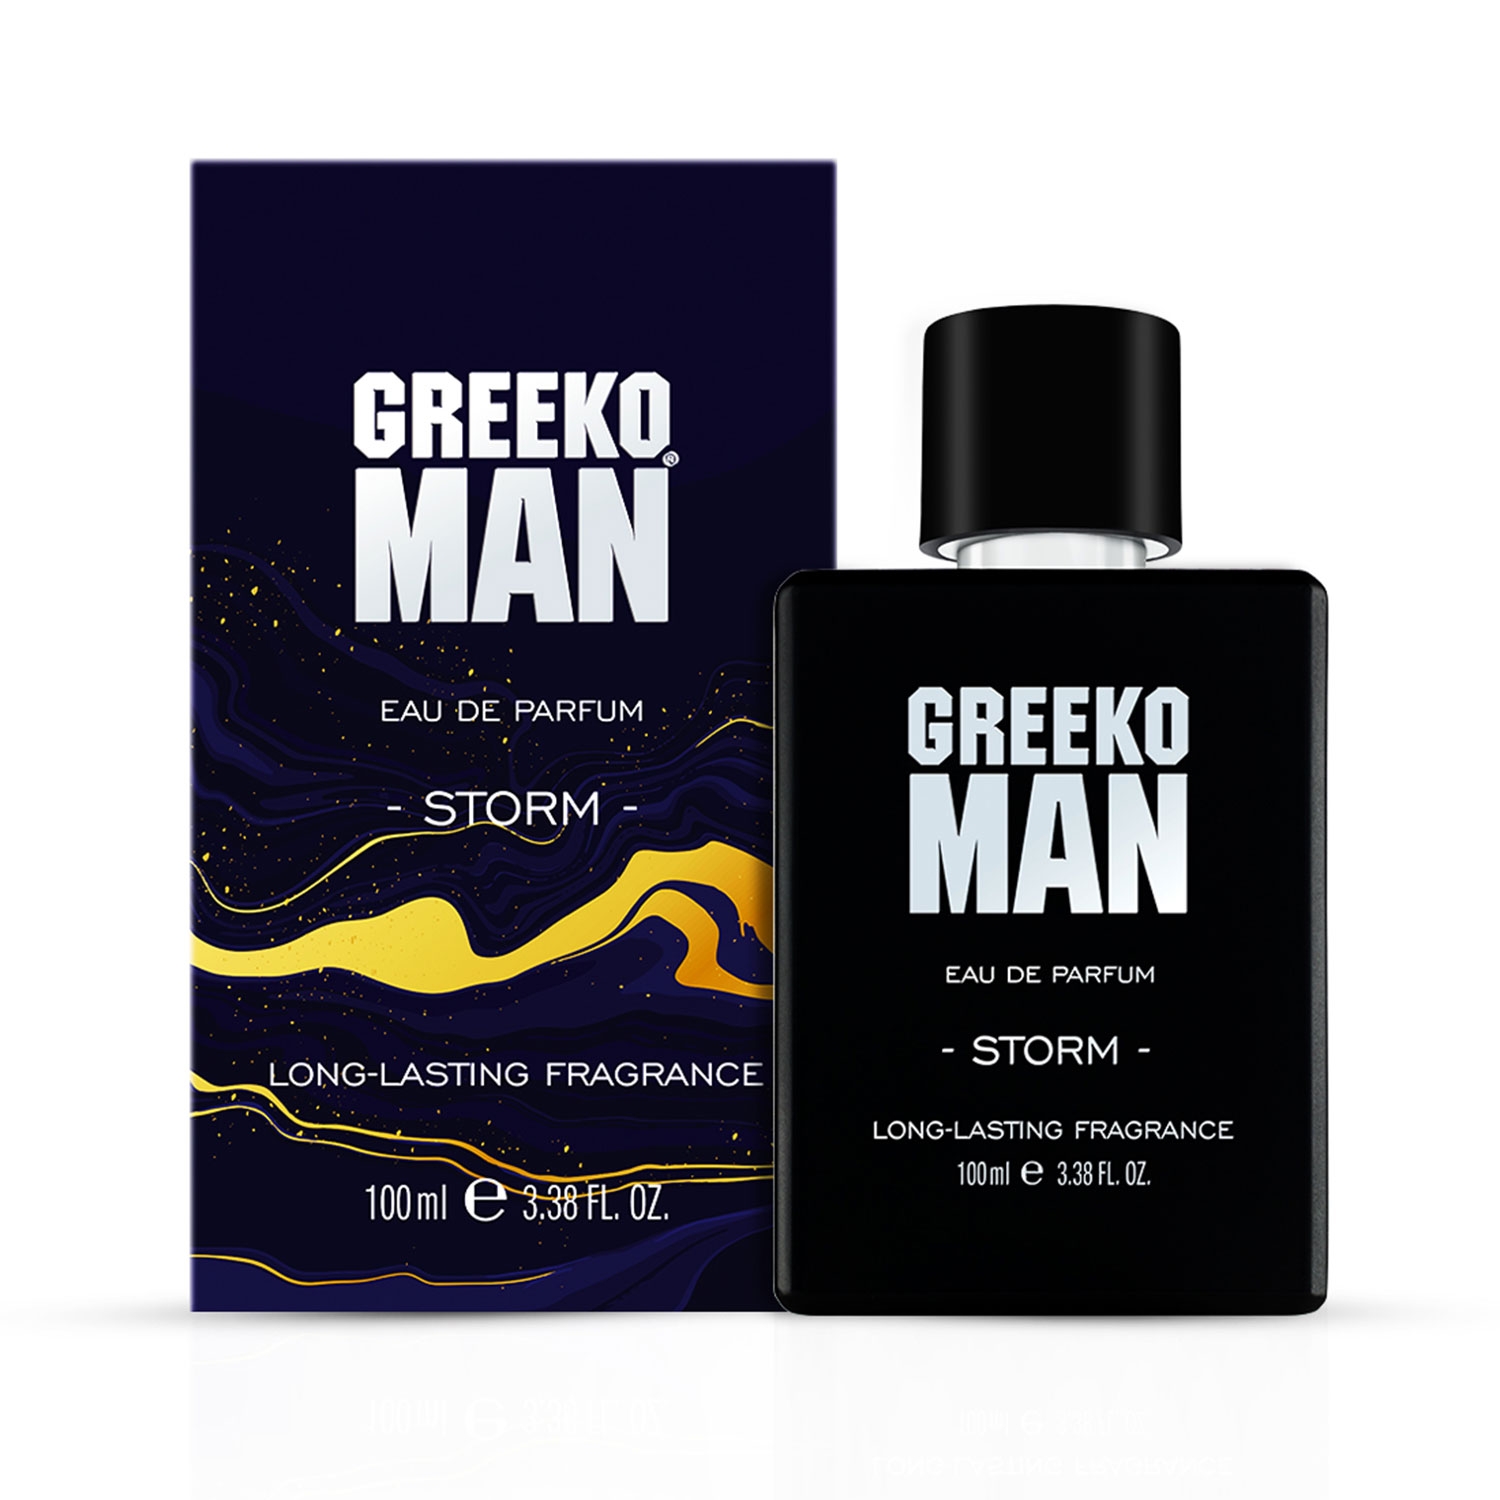 Greeko Man Storm Eau De Parfum (100ml)